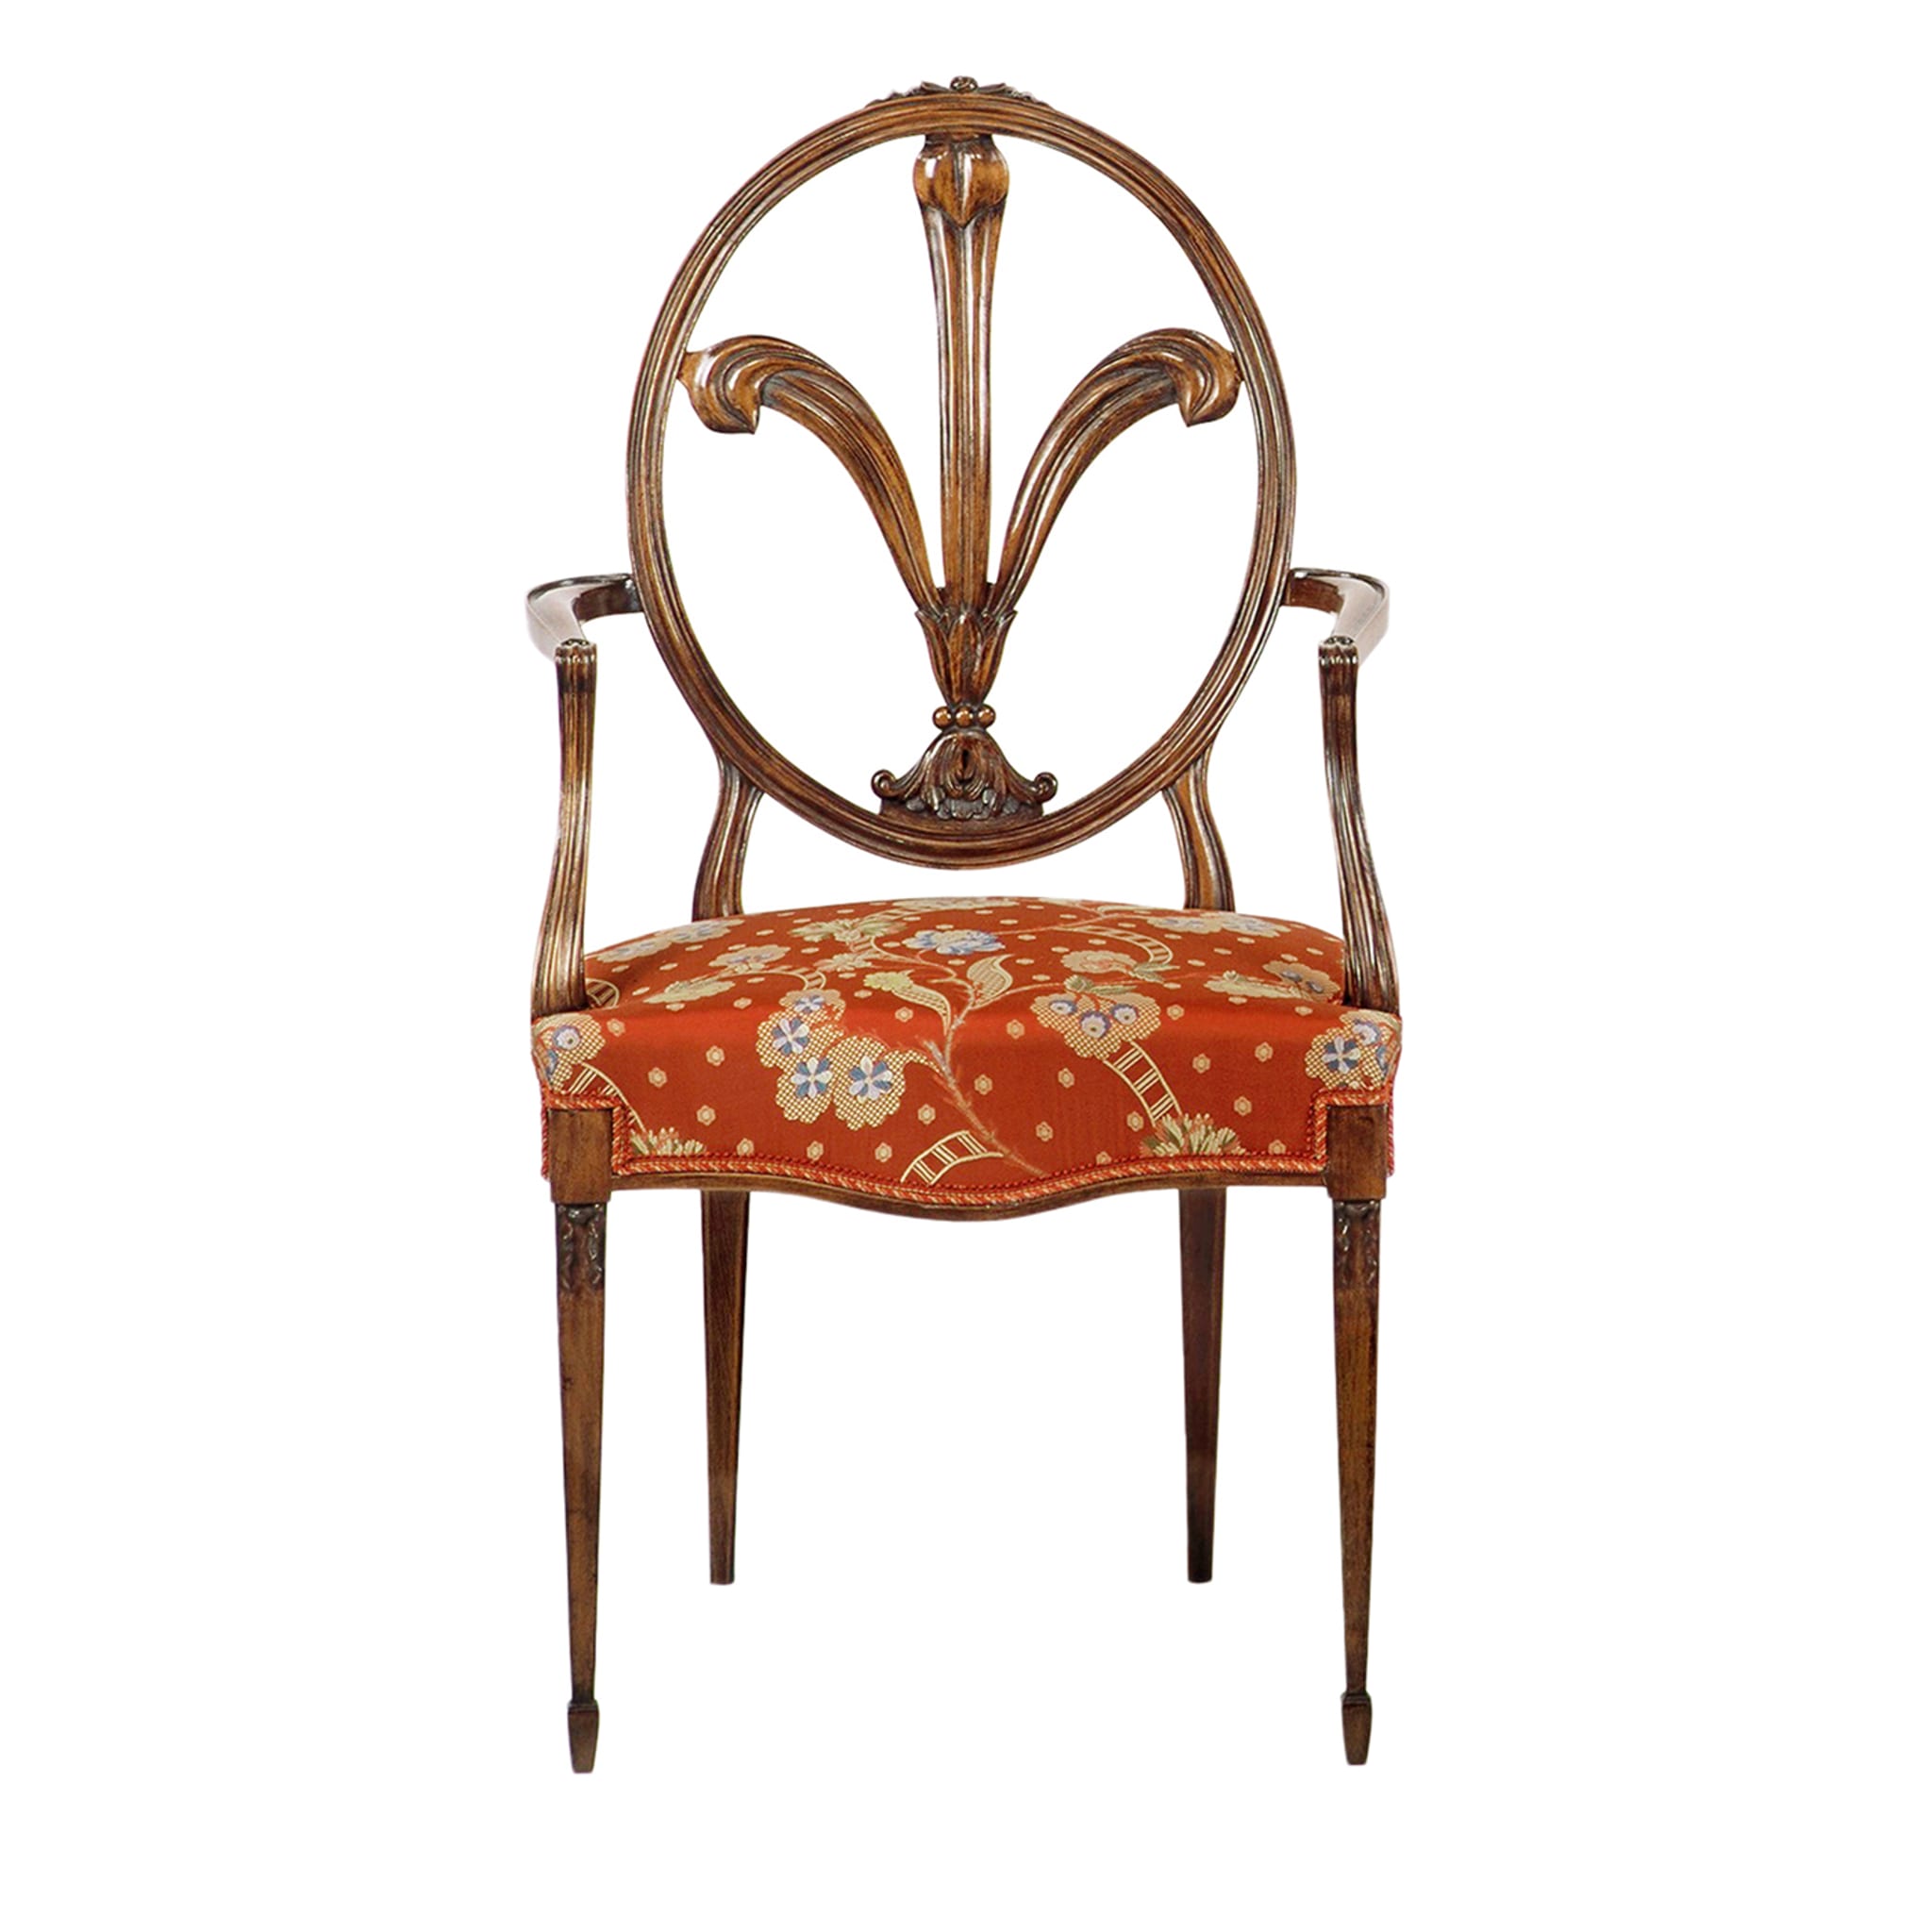 Hepplewhite-Style Red-Cushion Chair #2 - Main view